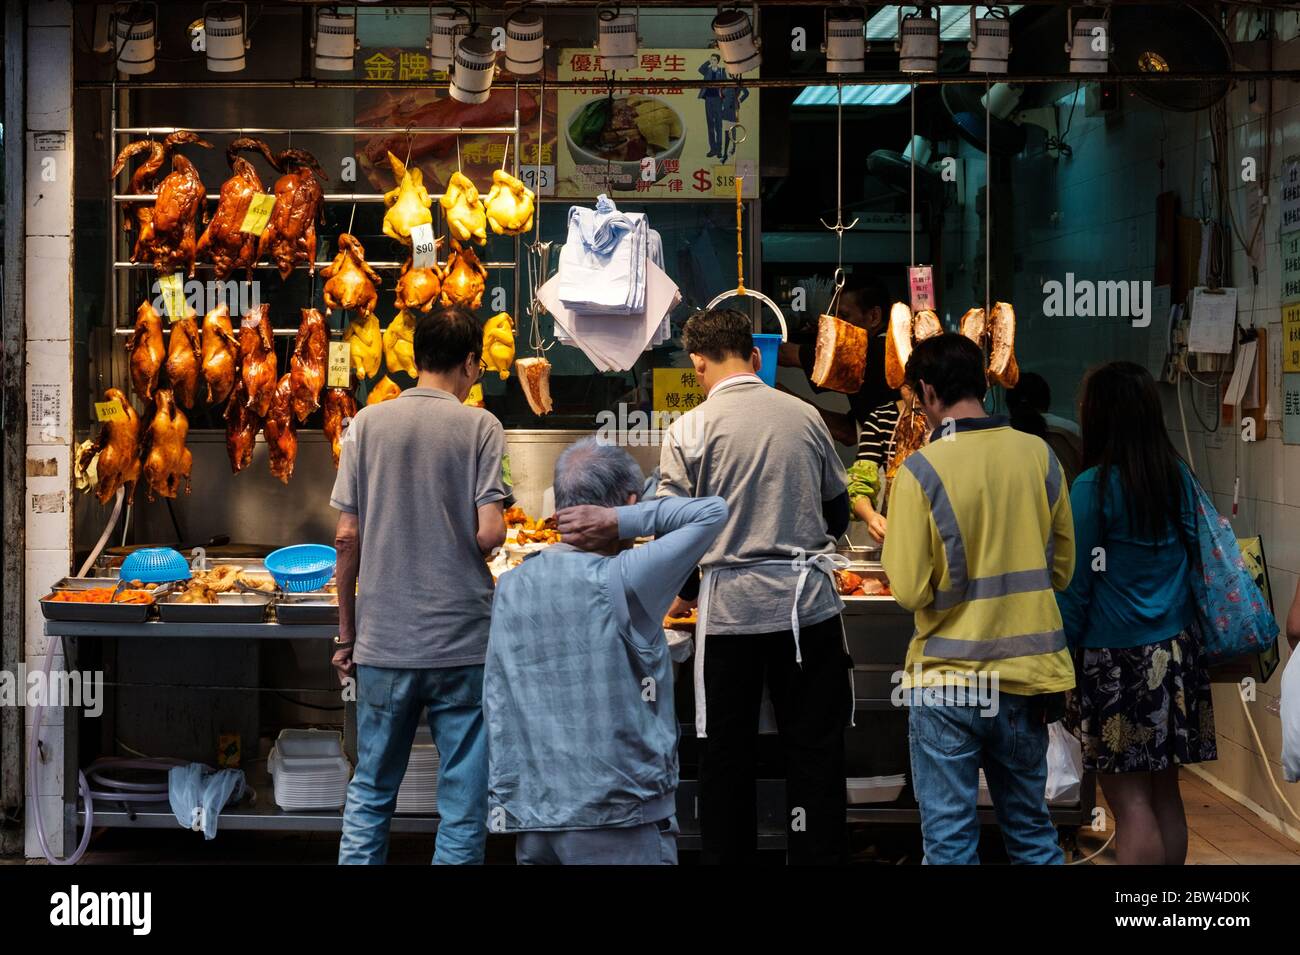 Hong Kong - November, 2019: People buying roasted ducks, peking duck and roast goose, on street food market in Hong Kong Stock Photo